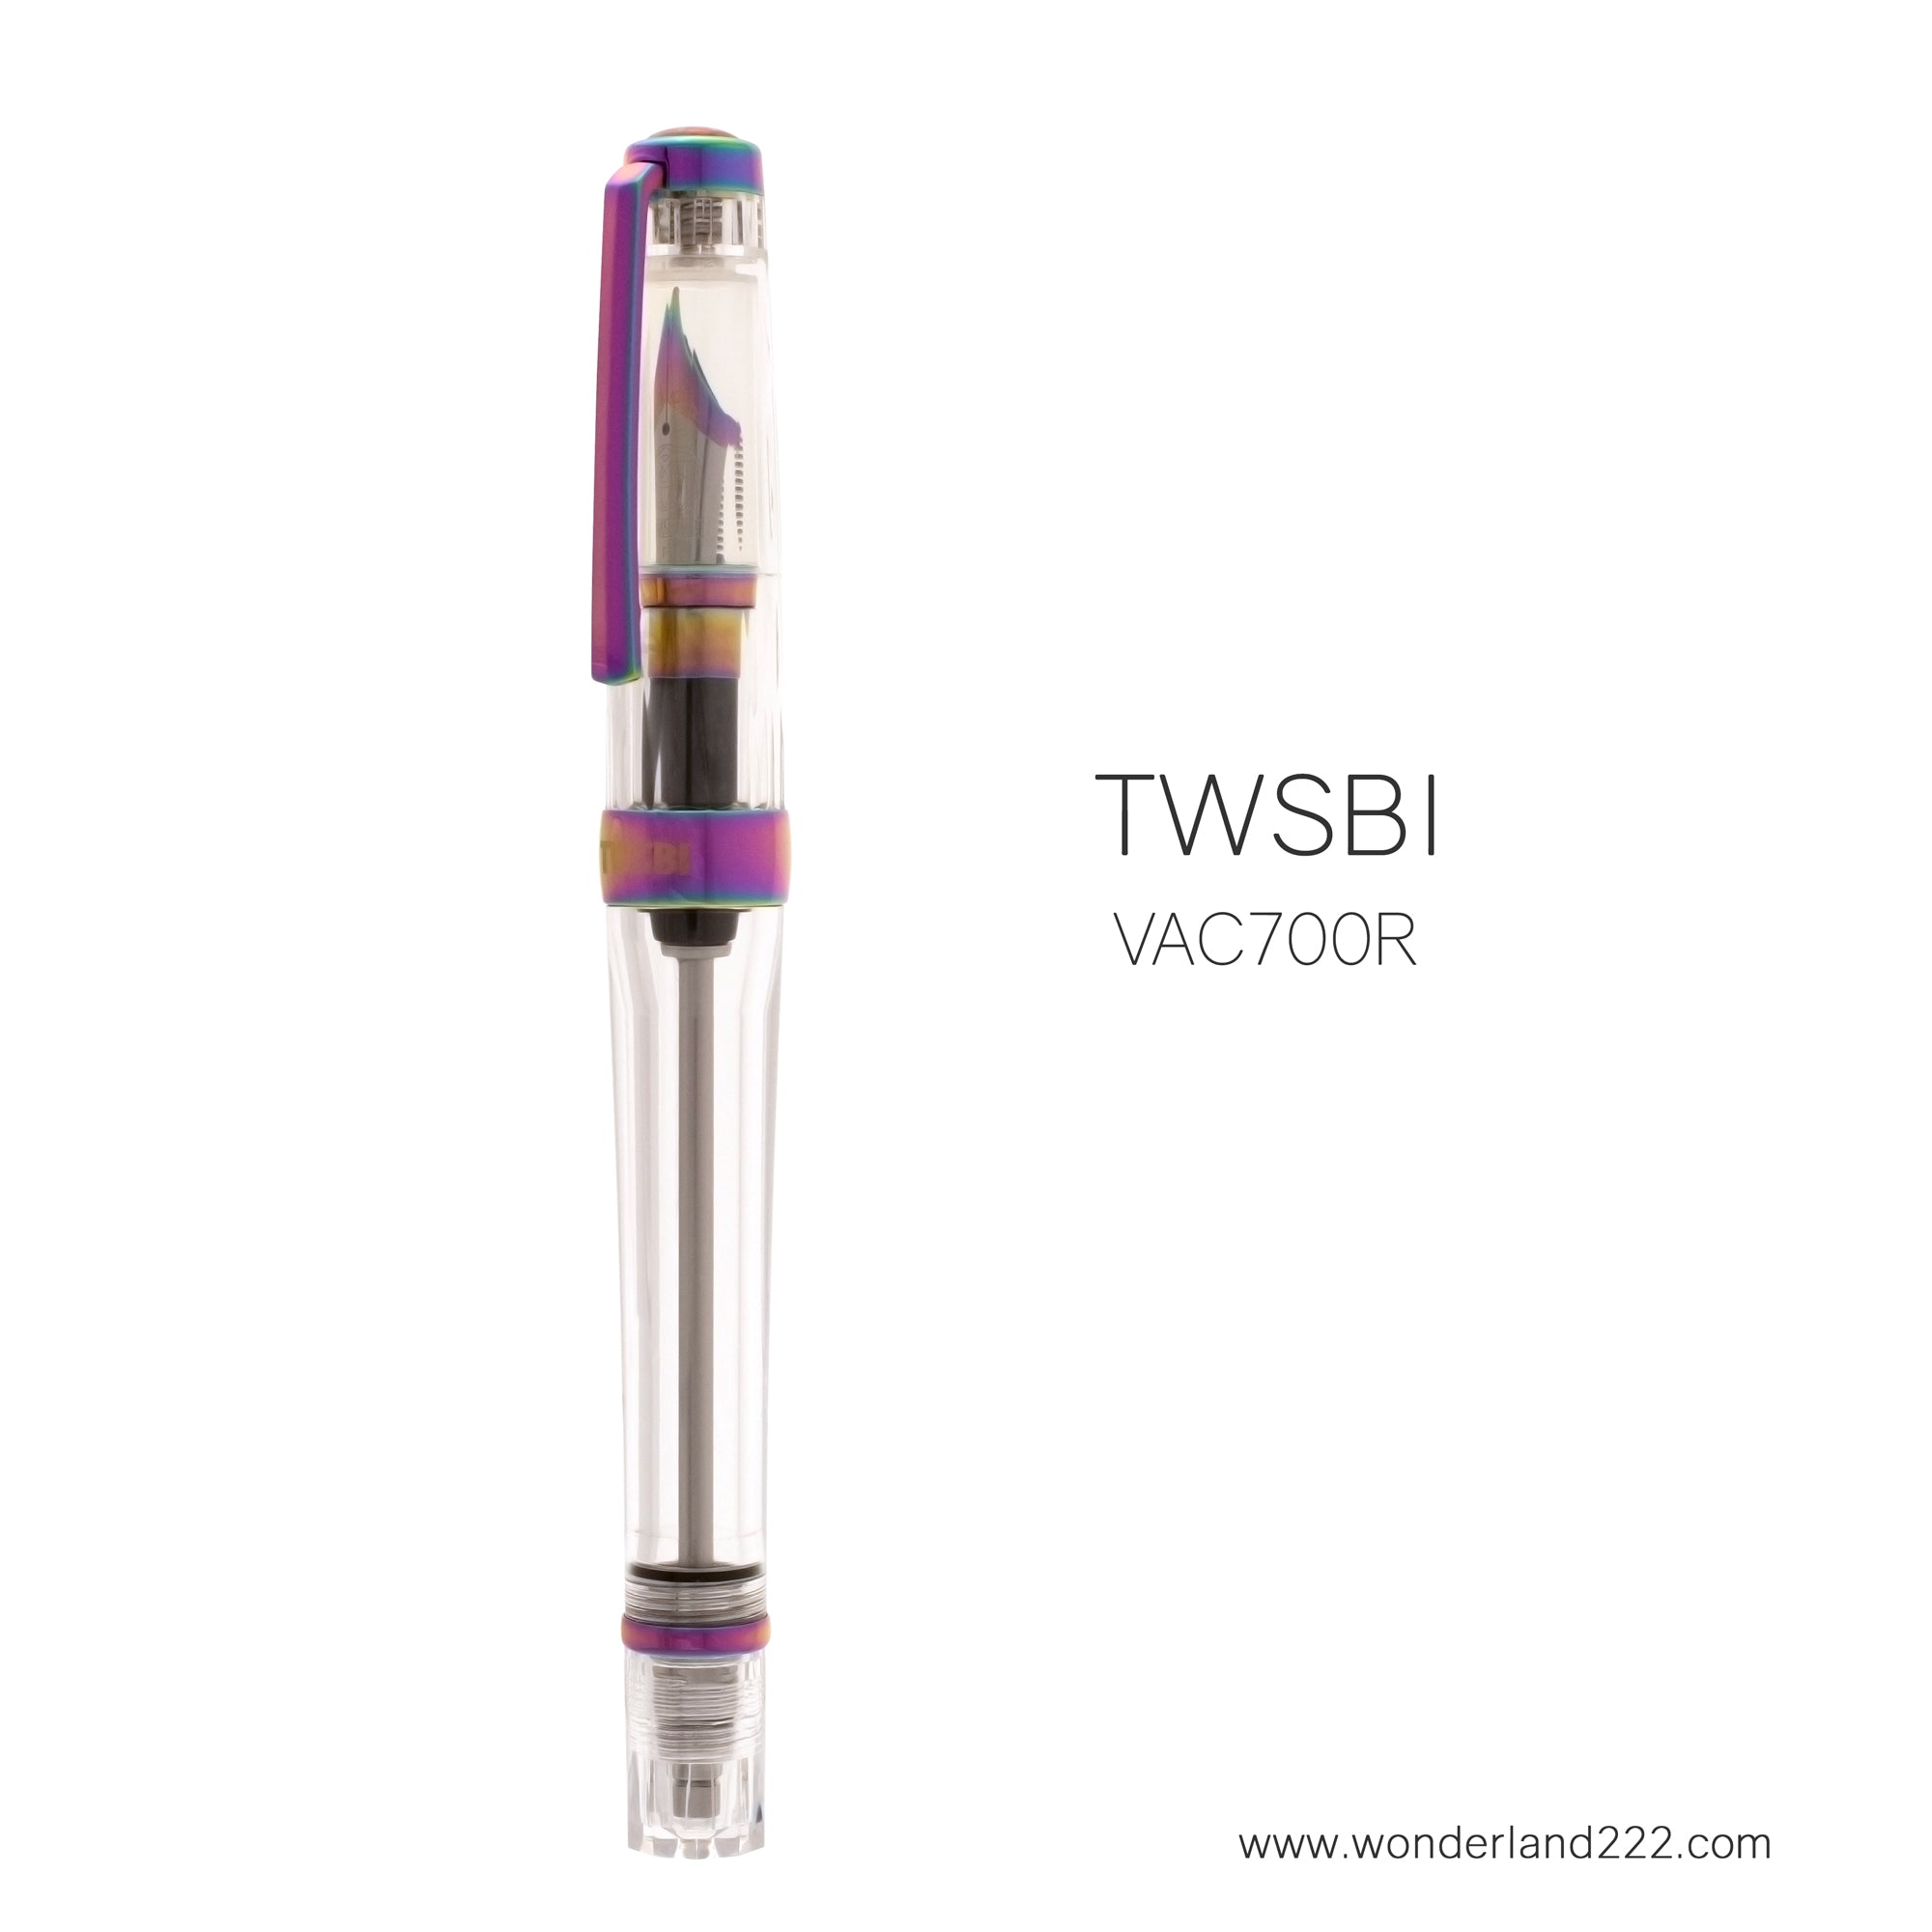 TWSBI-VAC700IR-Pen-Cover-Image_abf09820-9beb-404a-b48e-375acba34430.jpg